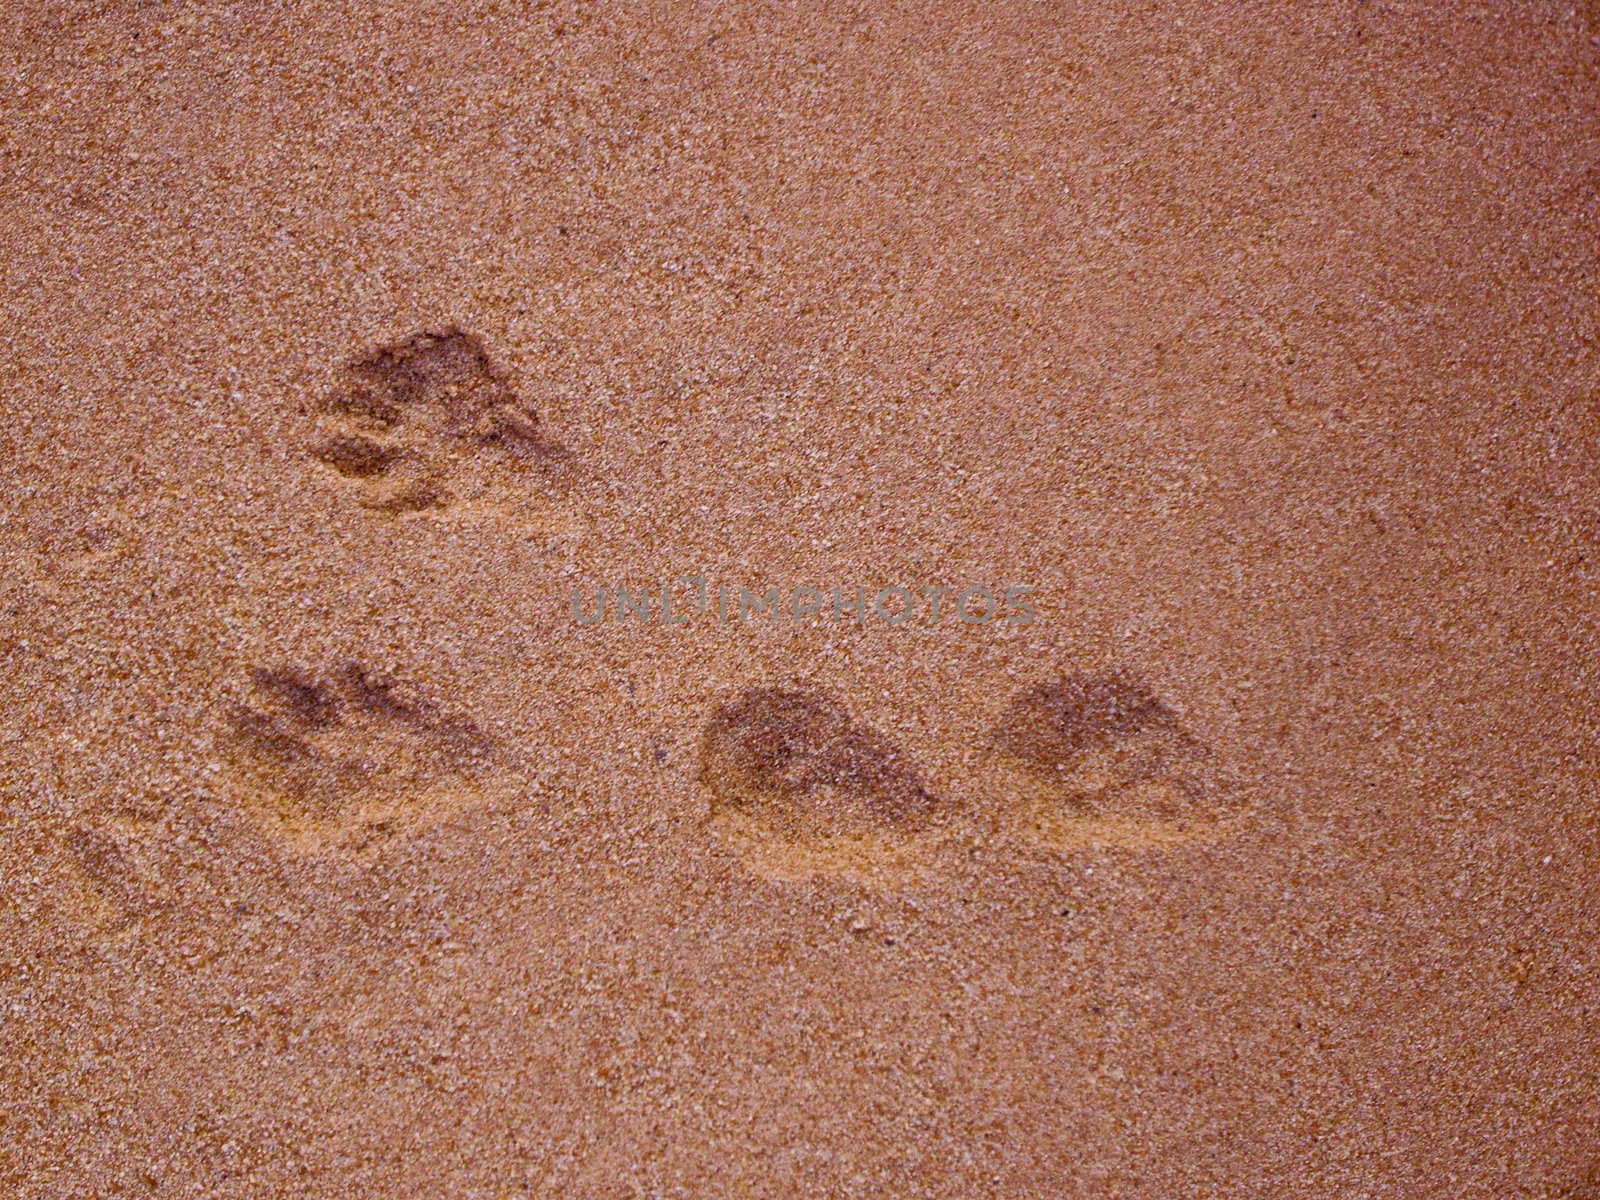 Animal leaves tracks in sand